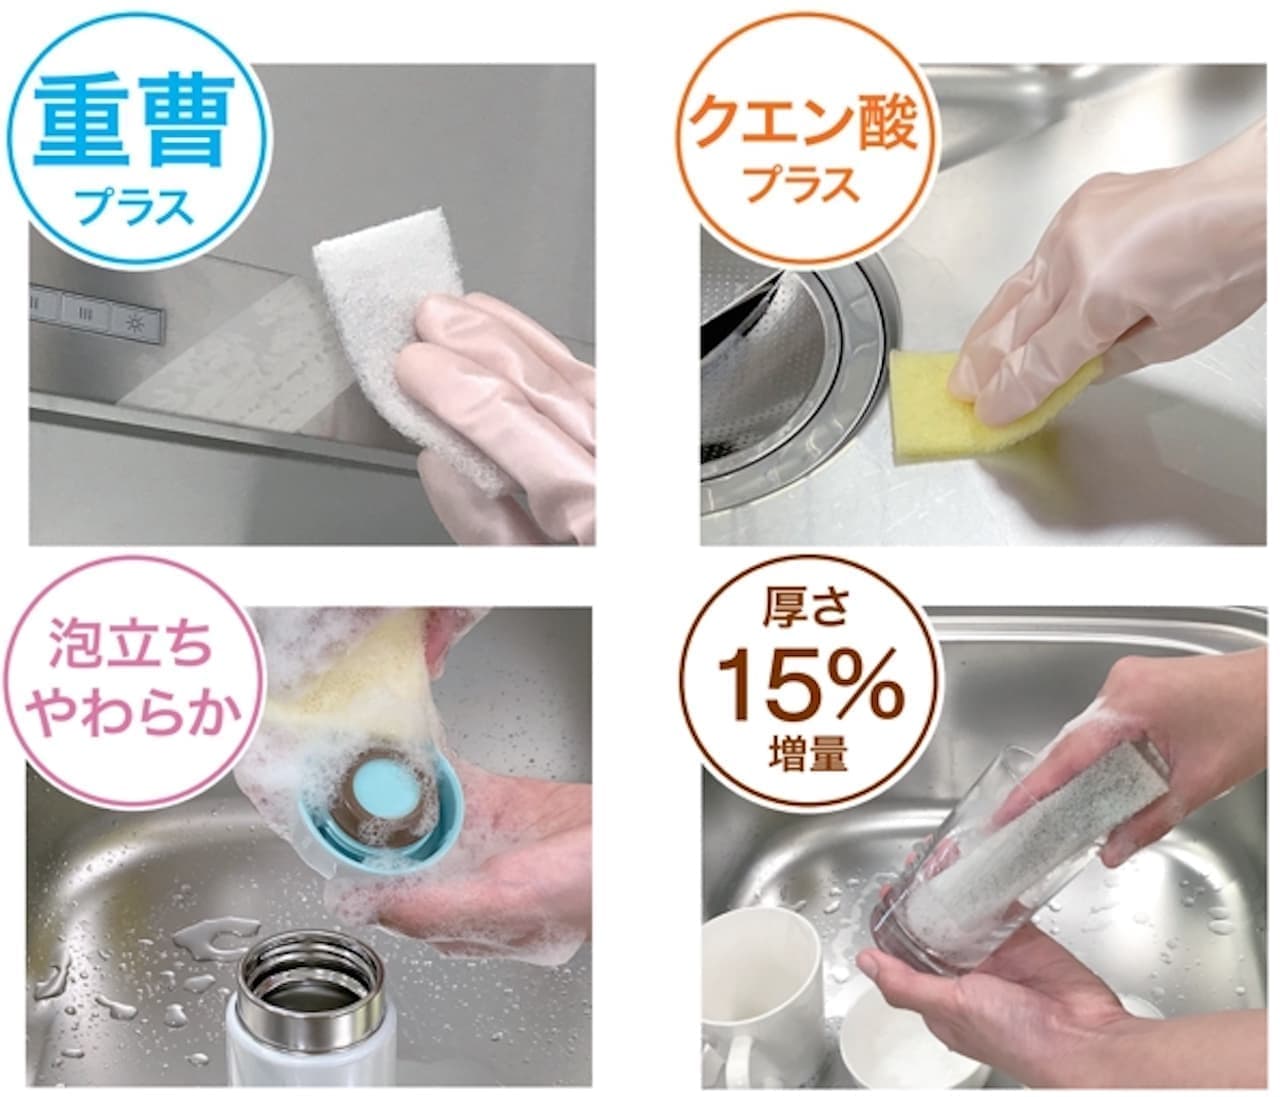 Nitori "Mainichi-Torirekae Kitchen Sponge" Series New Arrival